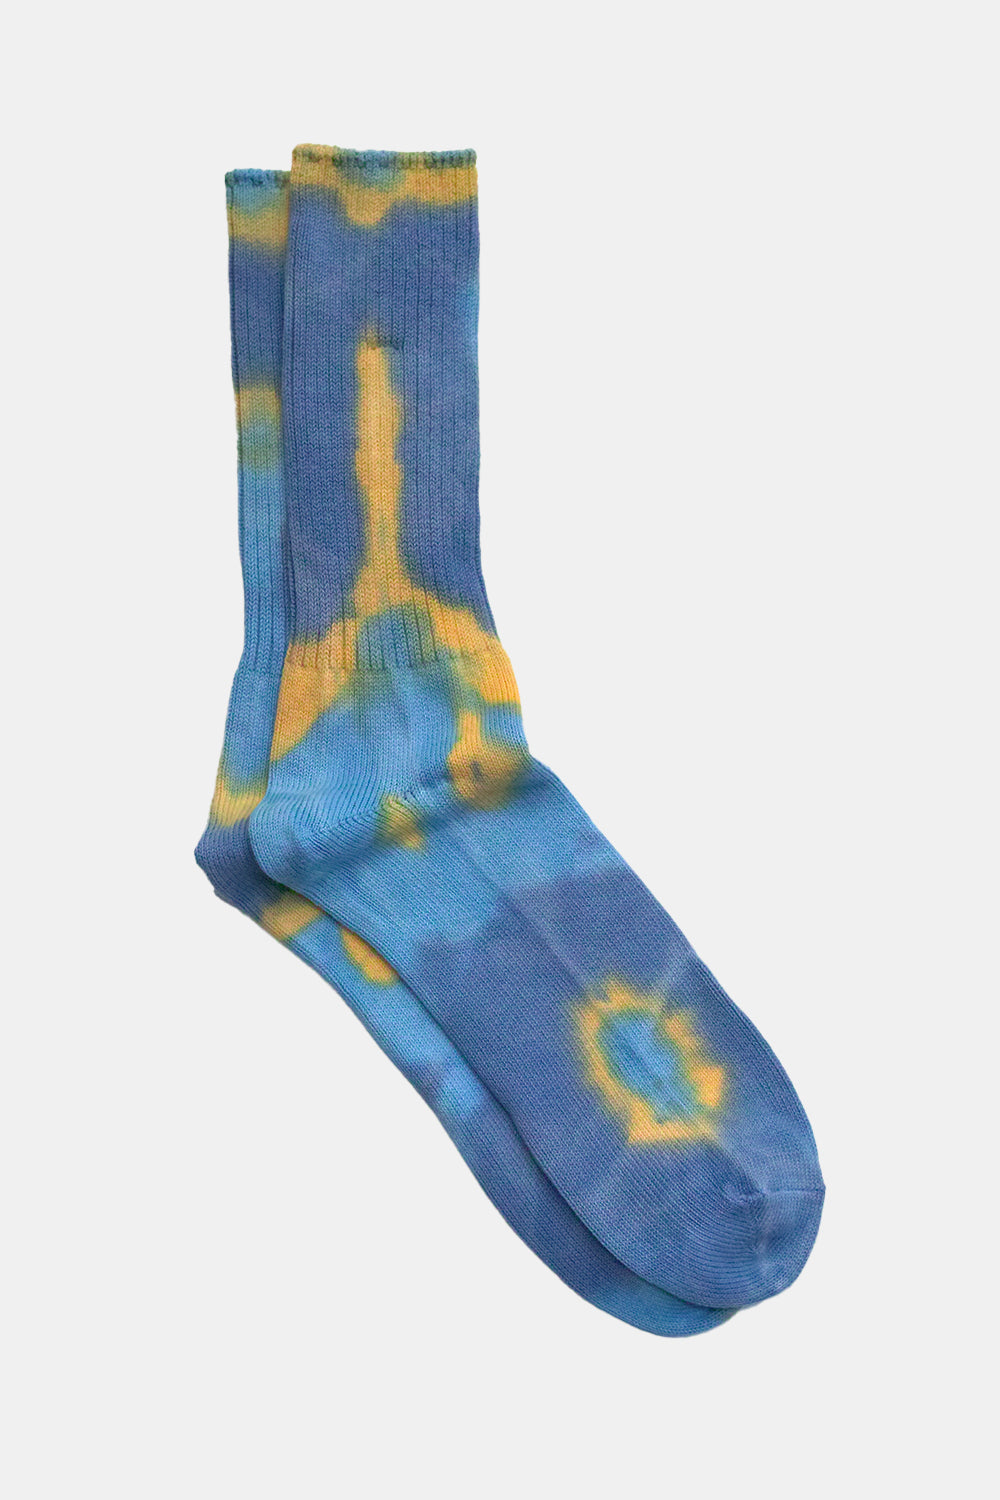 Anonymous Ism Tie Dye Crew Socks (Blue)
